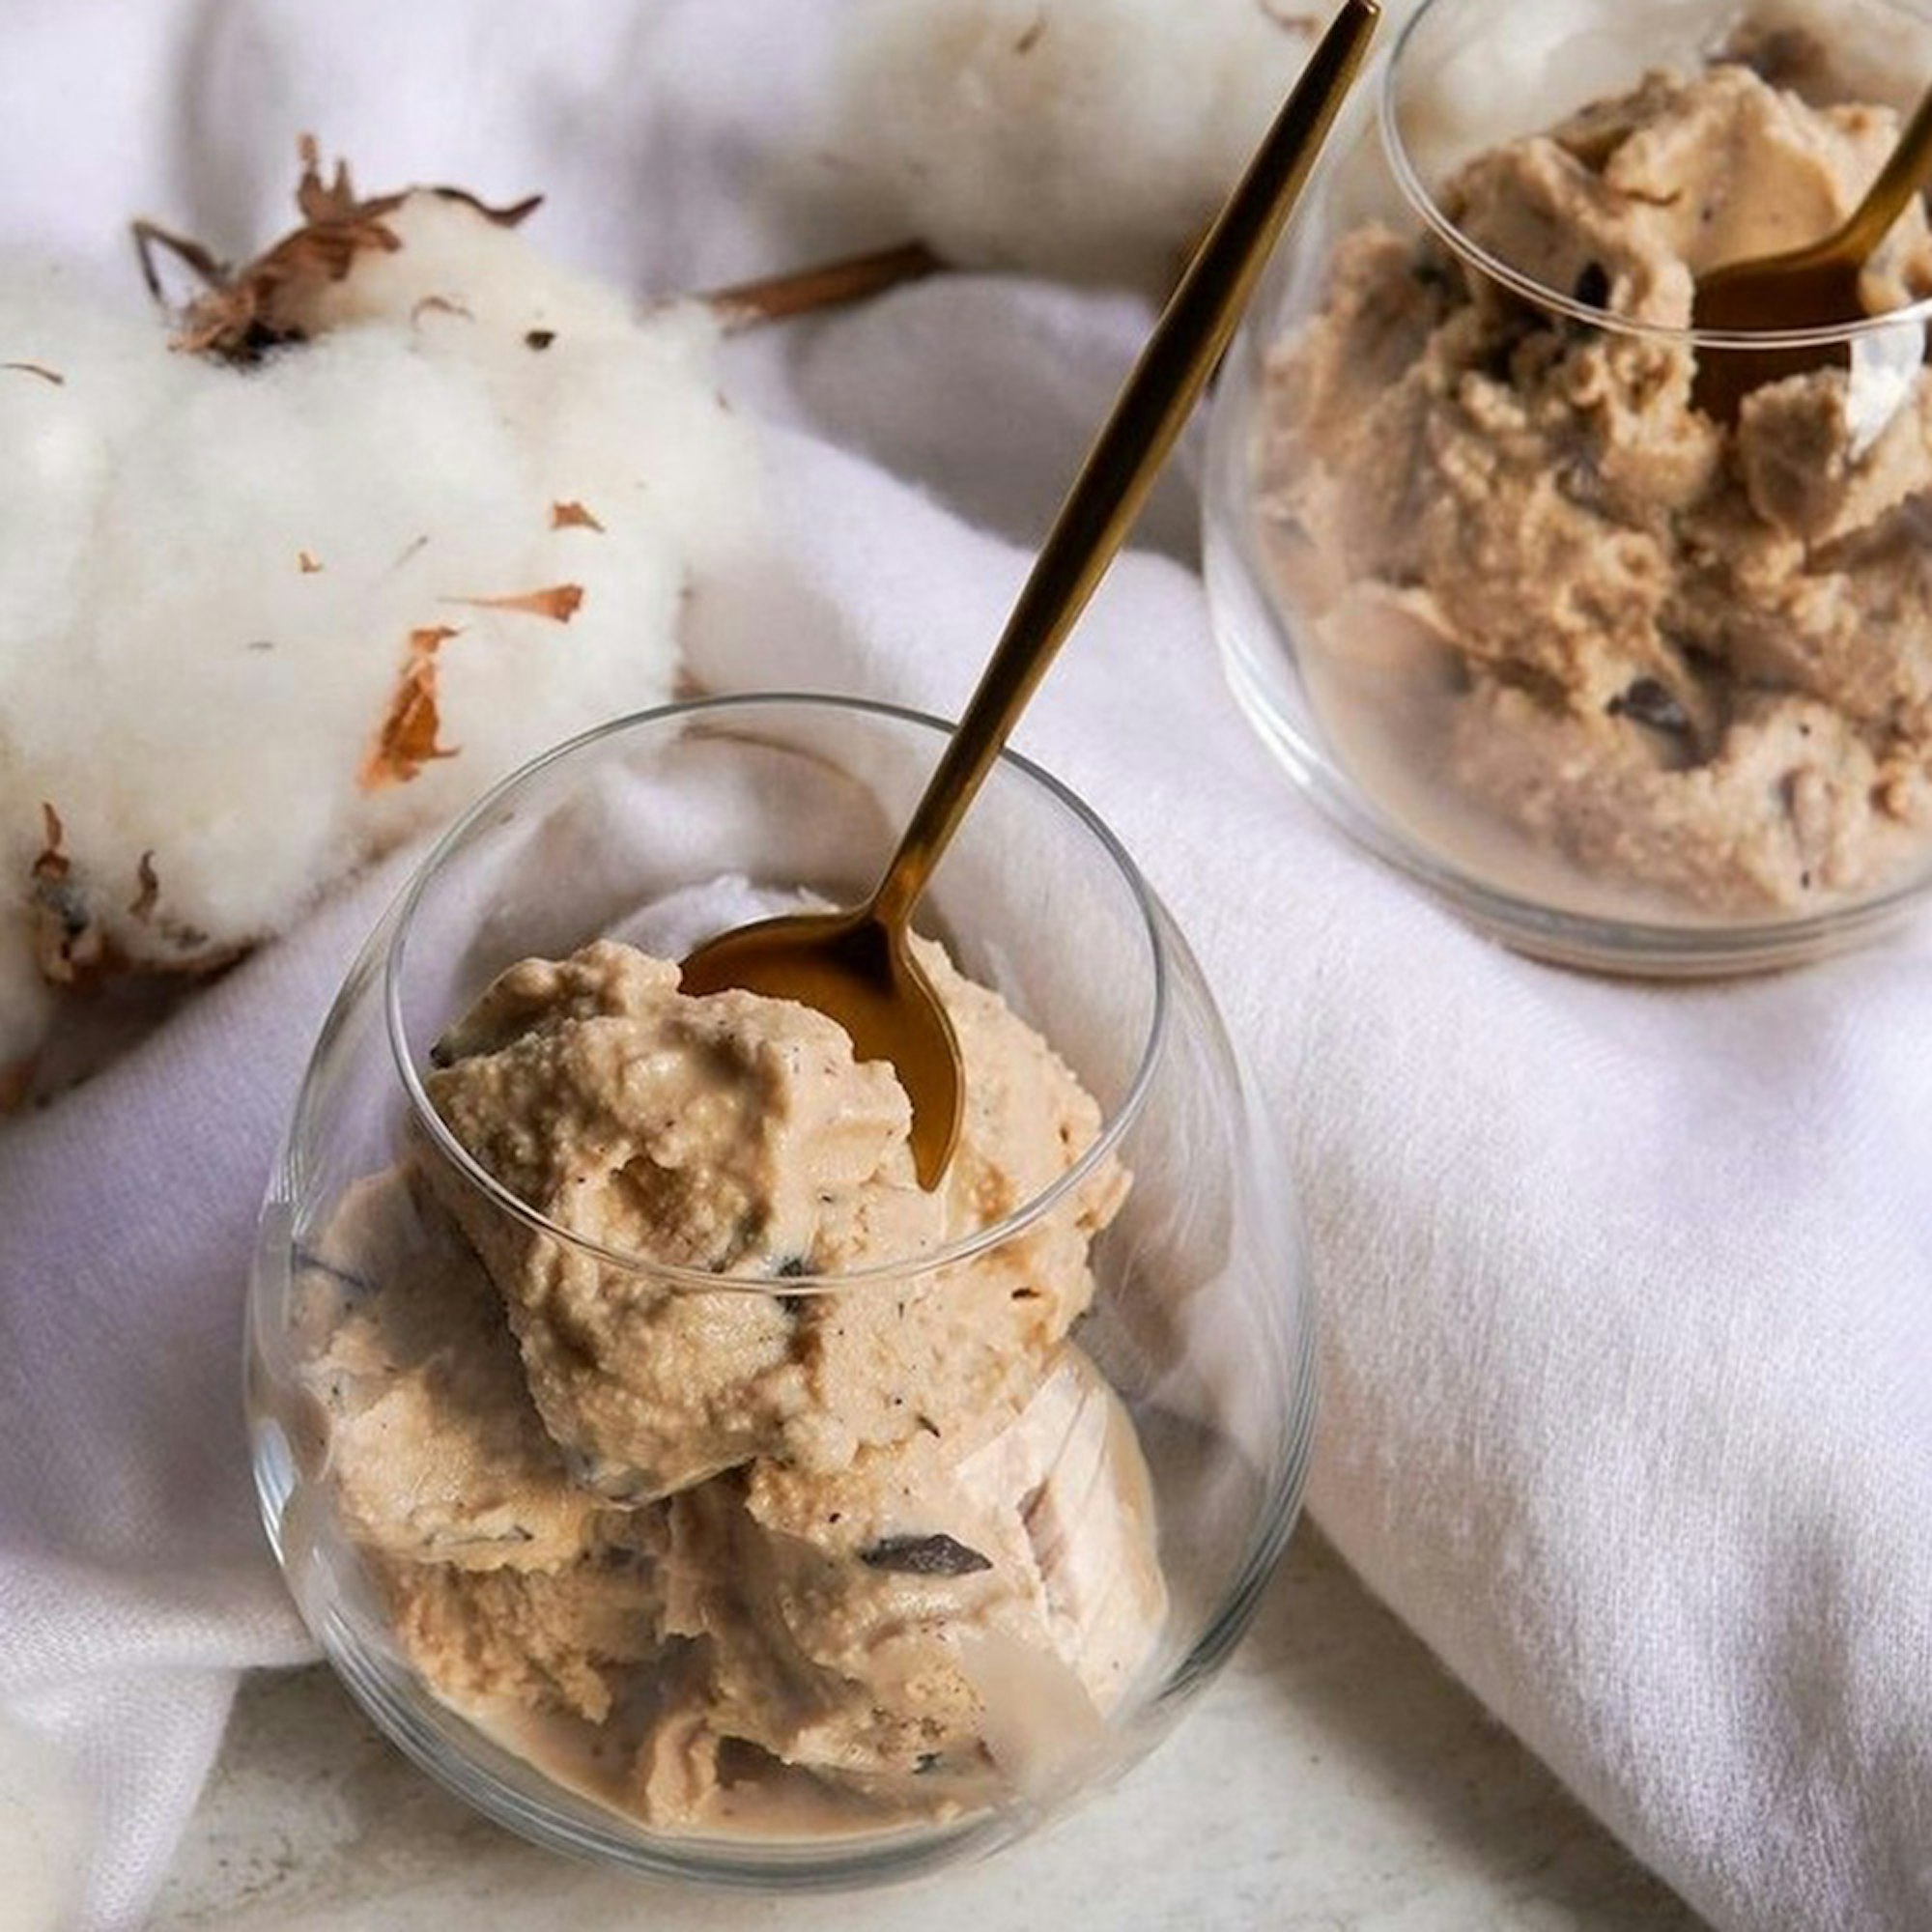 Creamy Hazelnut Ice Cream with Decadent Choc Chunks Recipe